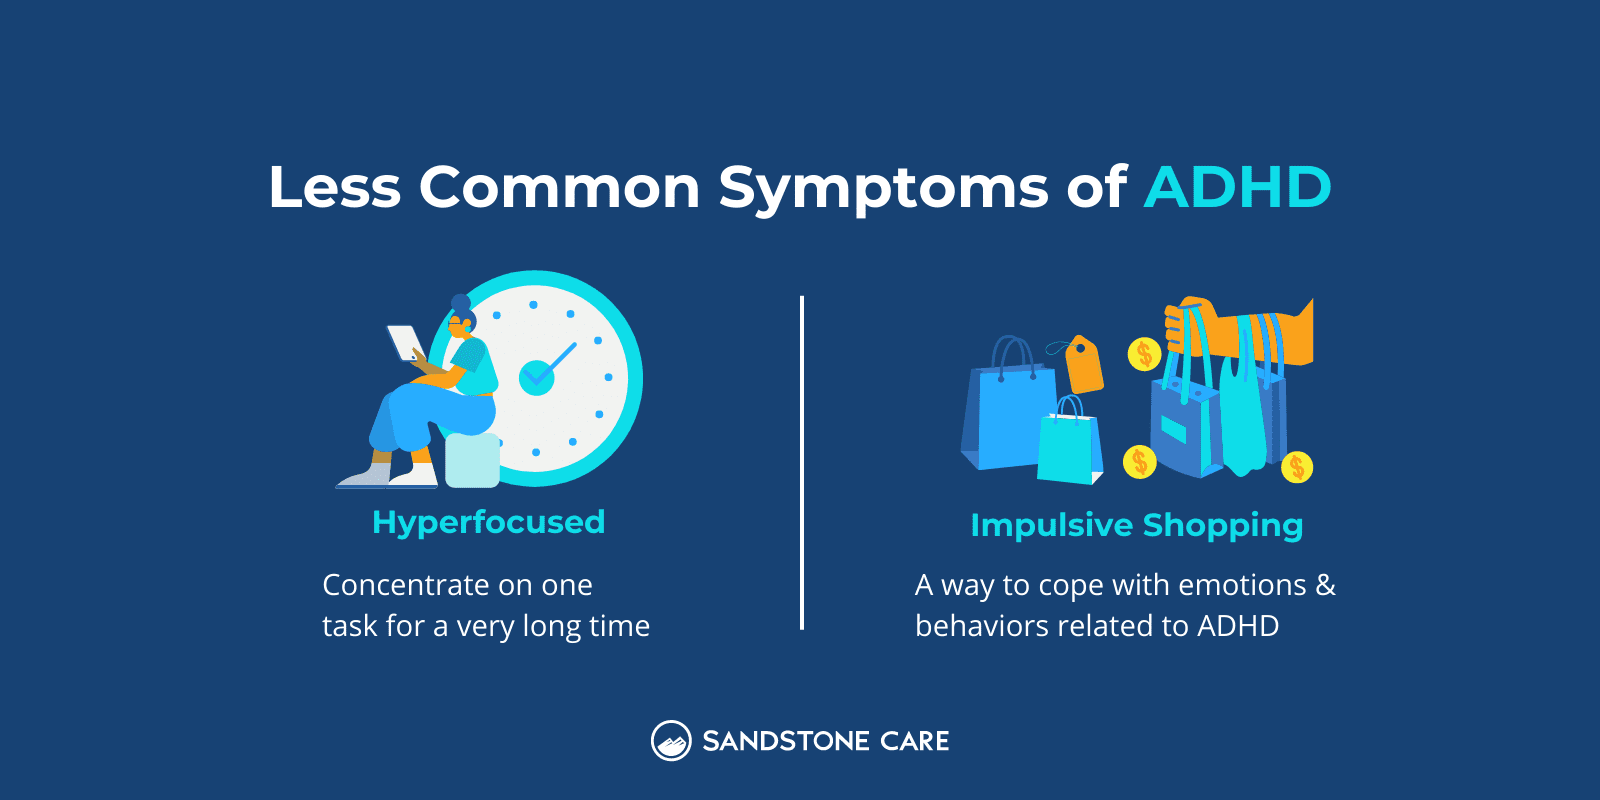 2 Less common symptoms of ADHD explained below a digital illustration that represents the symptoms